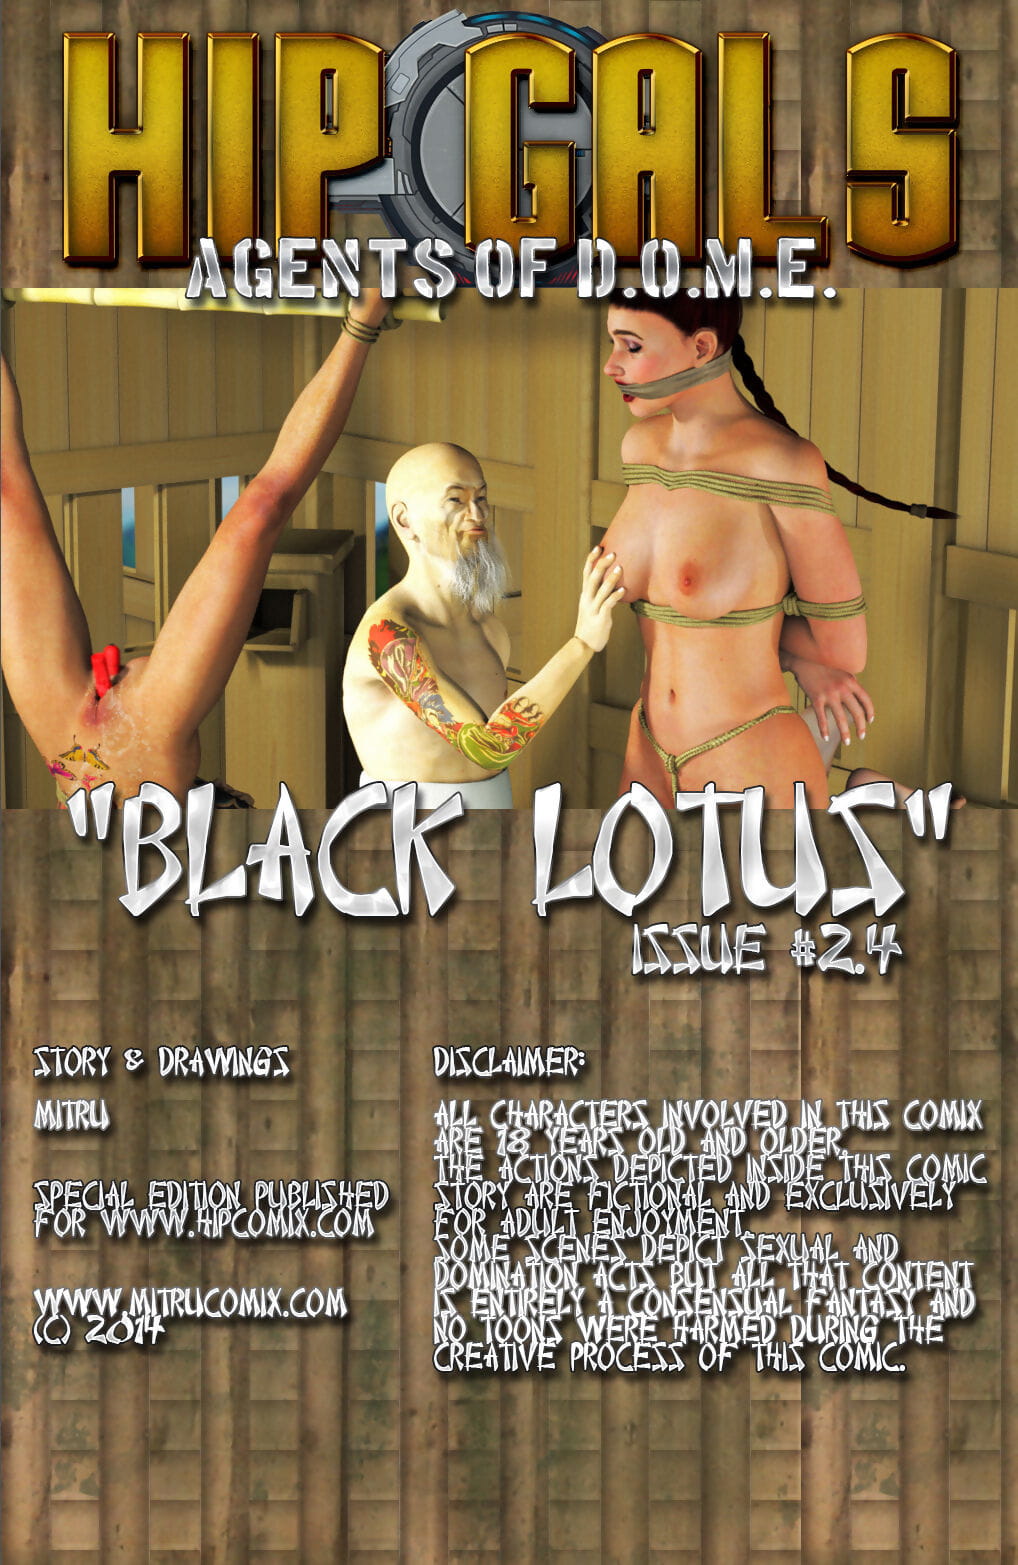 mitru negro lotus 1 6 Parte 4 page 1